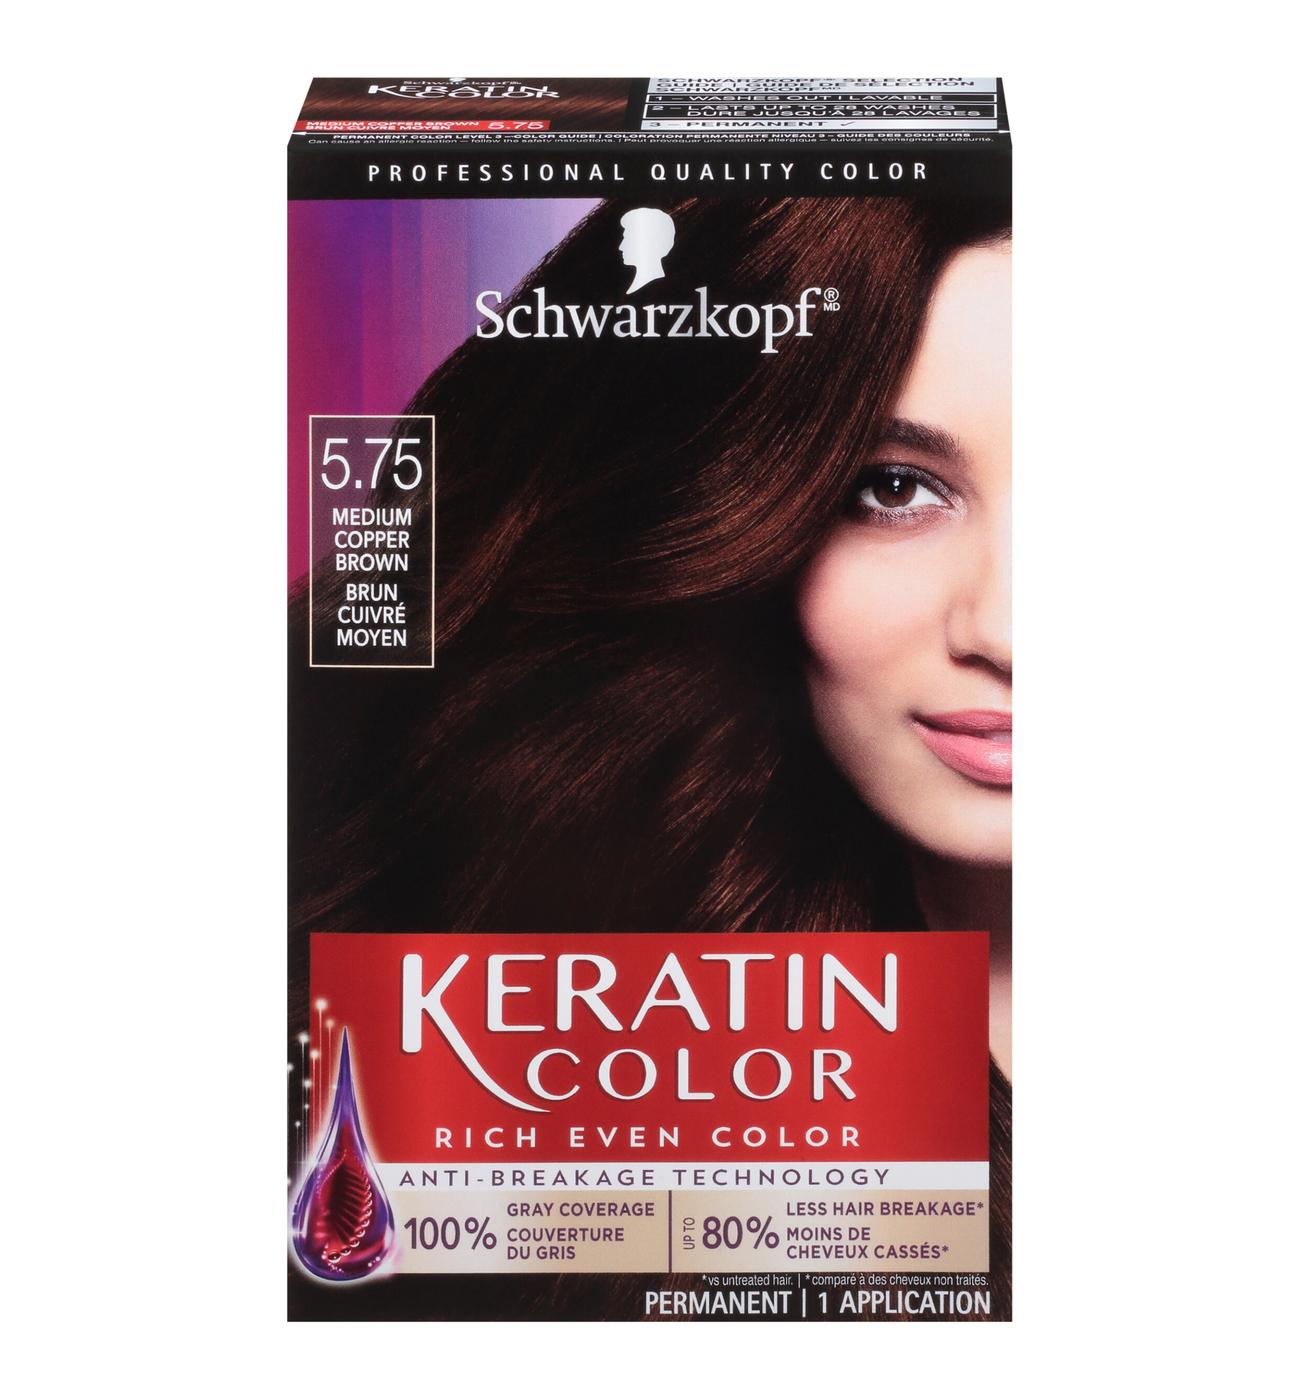 Schwarzkopf Keratin Color Permanent Hair Color - 5.75 Medium Copper Brown; image 1 of 2